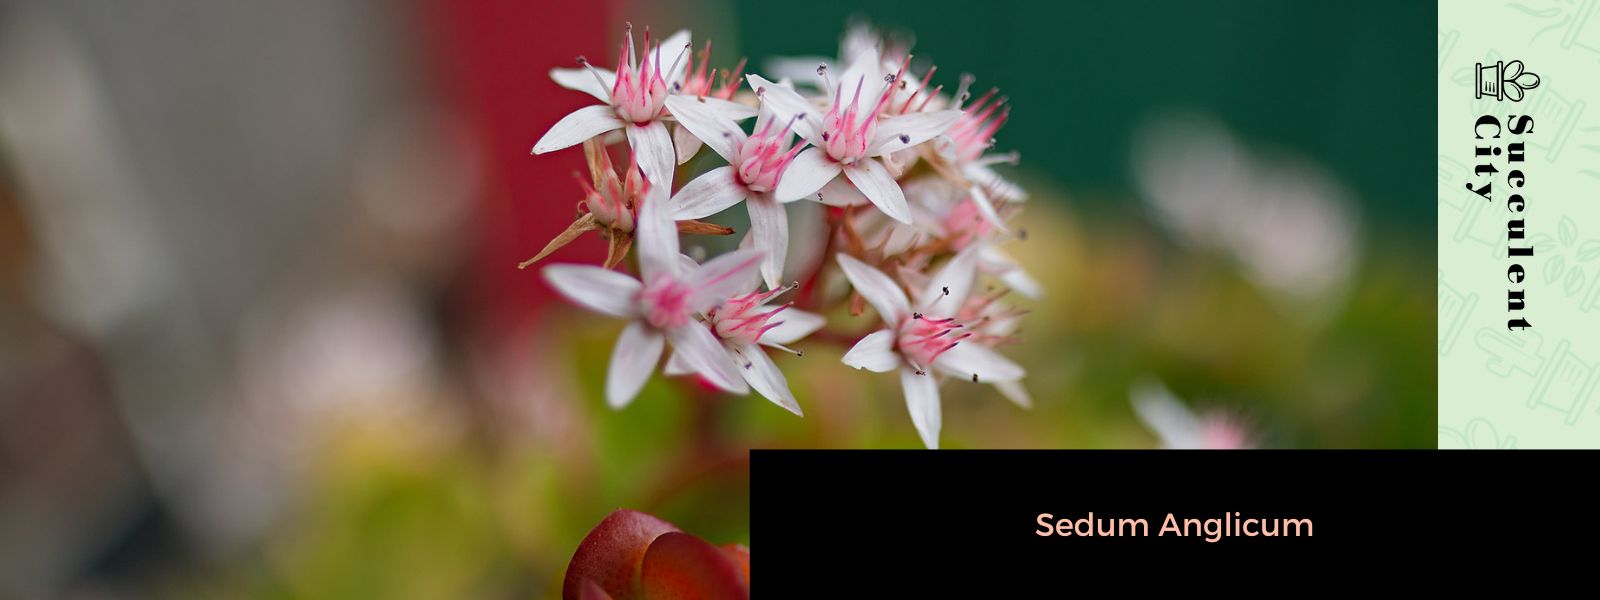 Sedum Anglicum (La planta "inglesa Stonecrop")